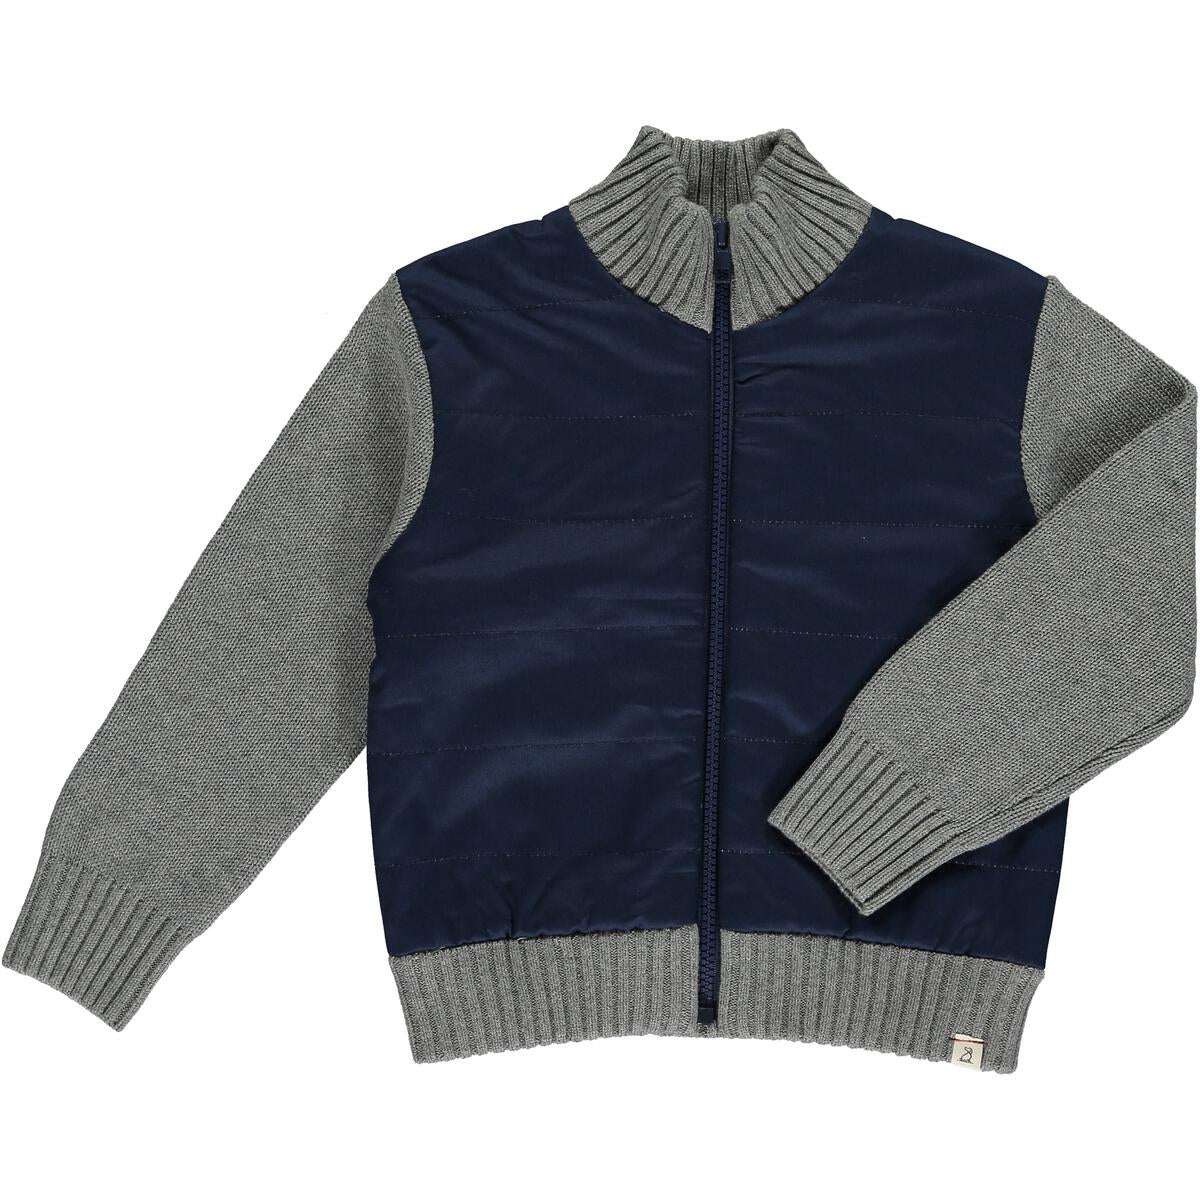 Joshy Sweater / Jacket